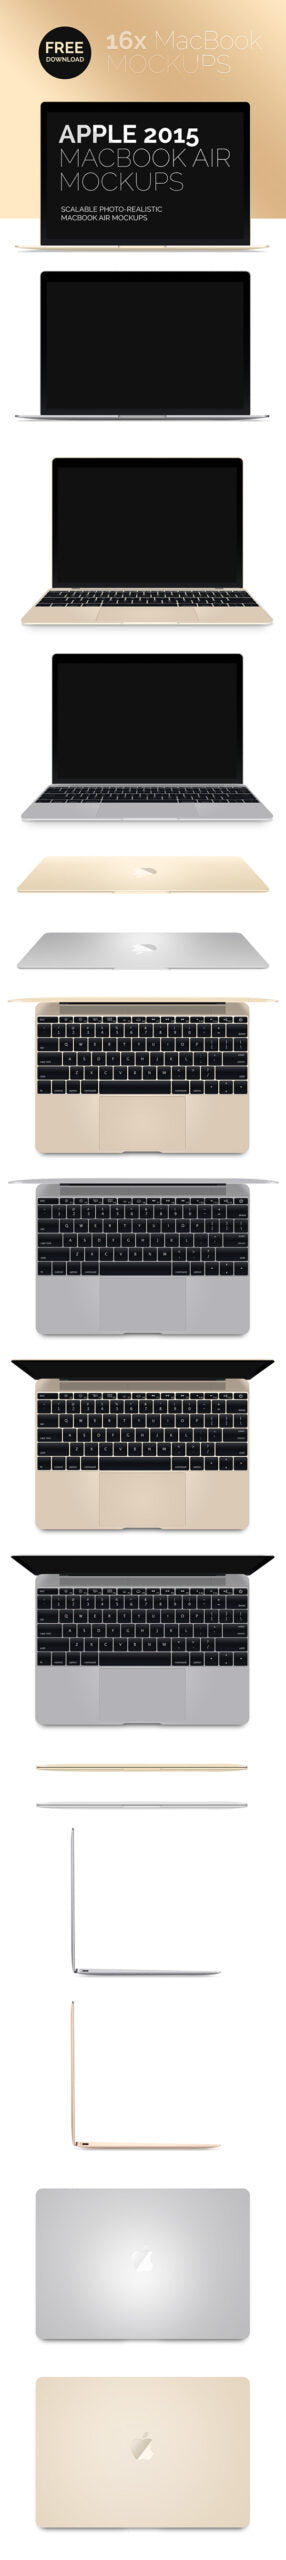 Free New Macbook 2015 Mockups